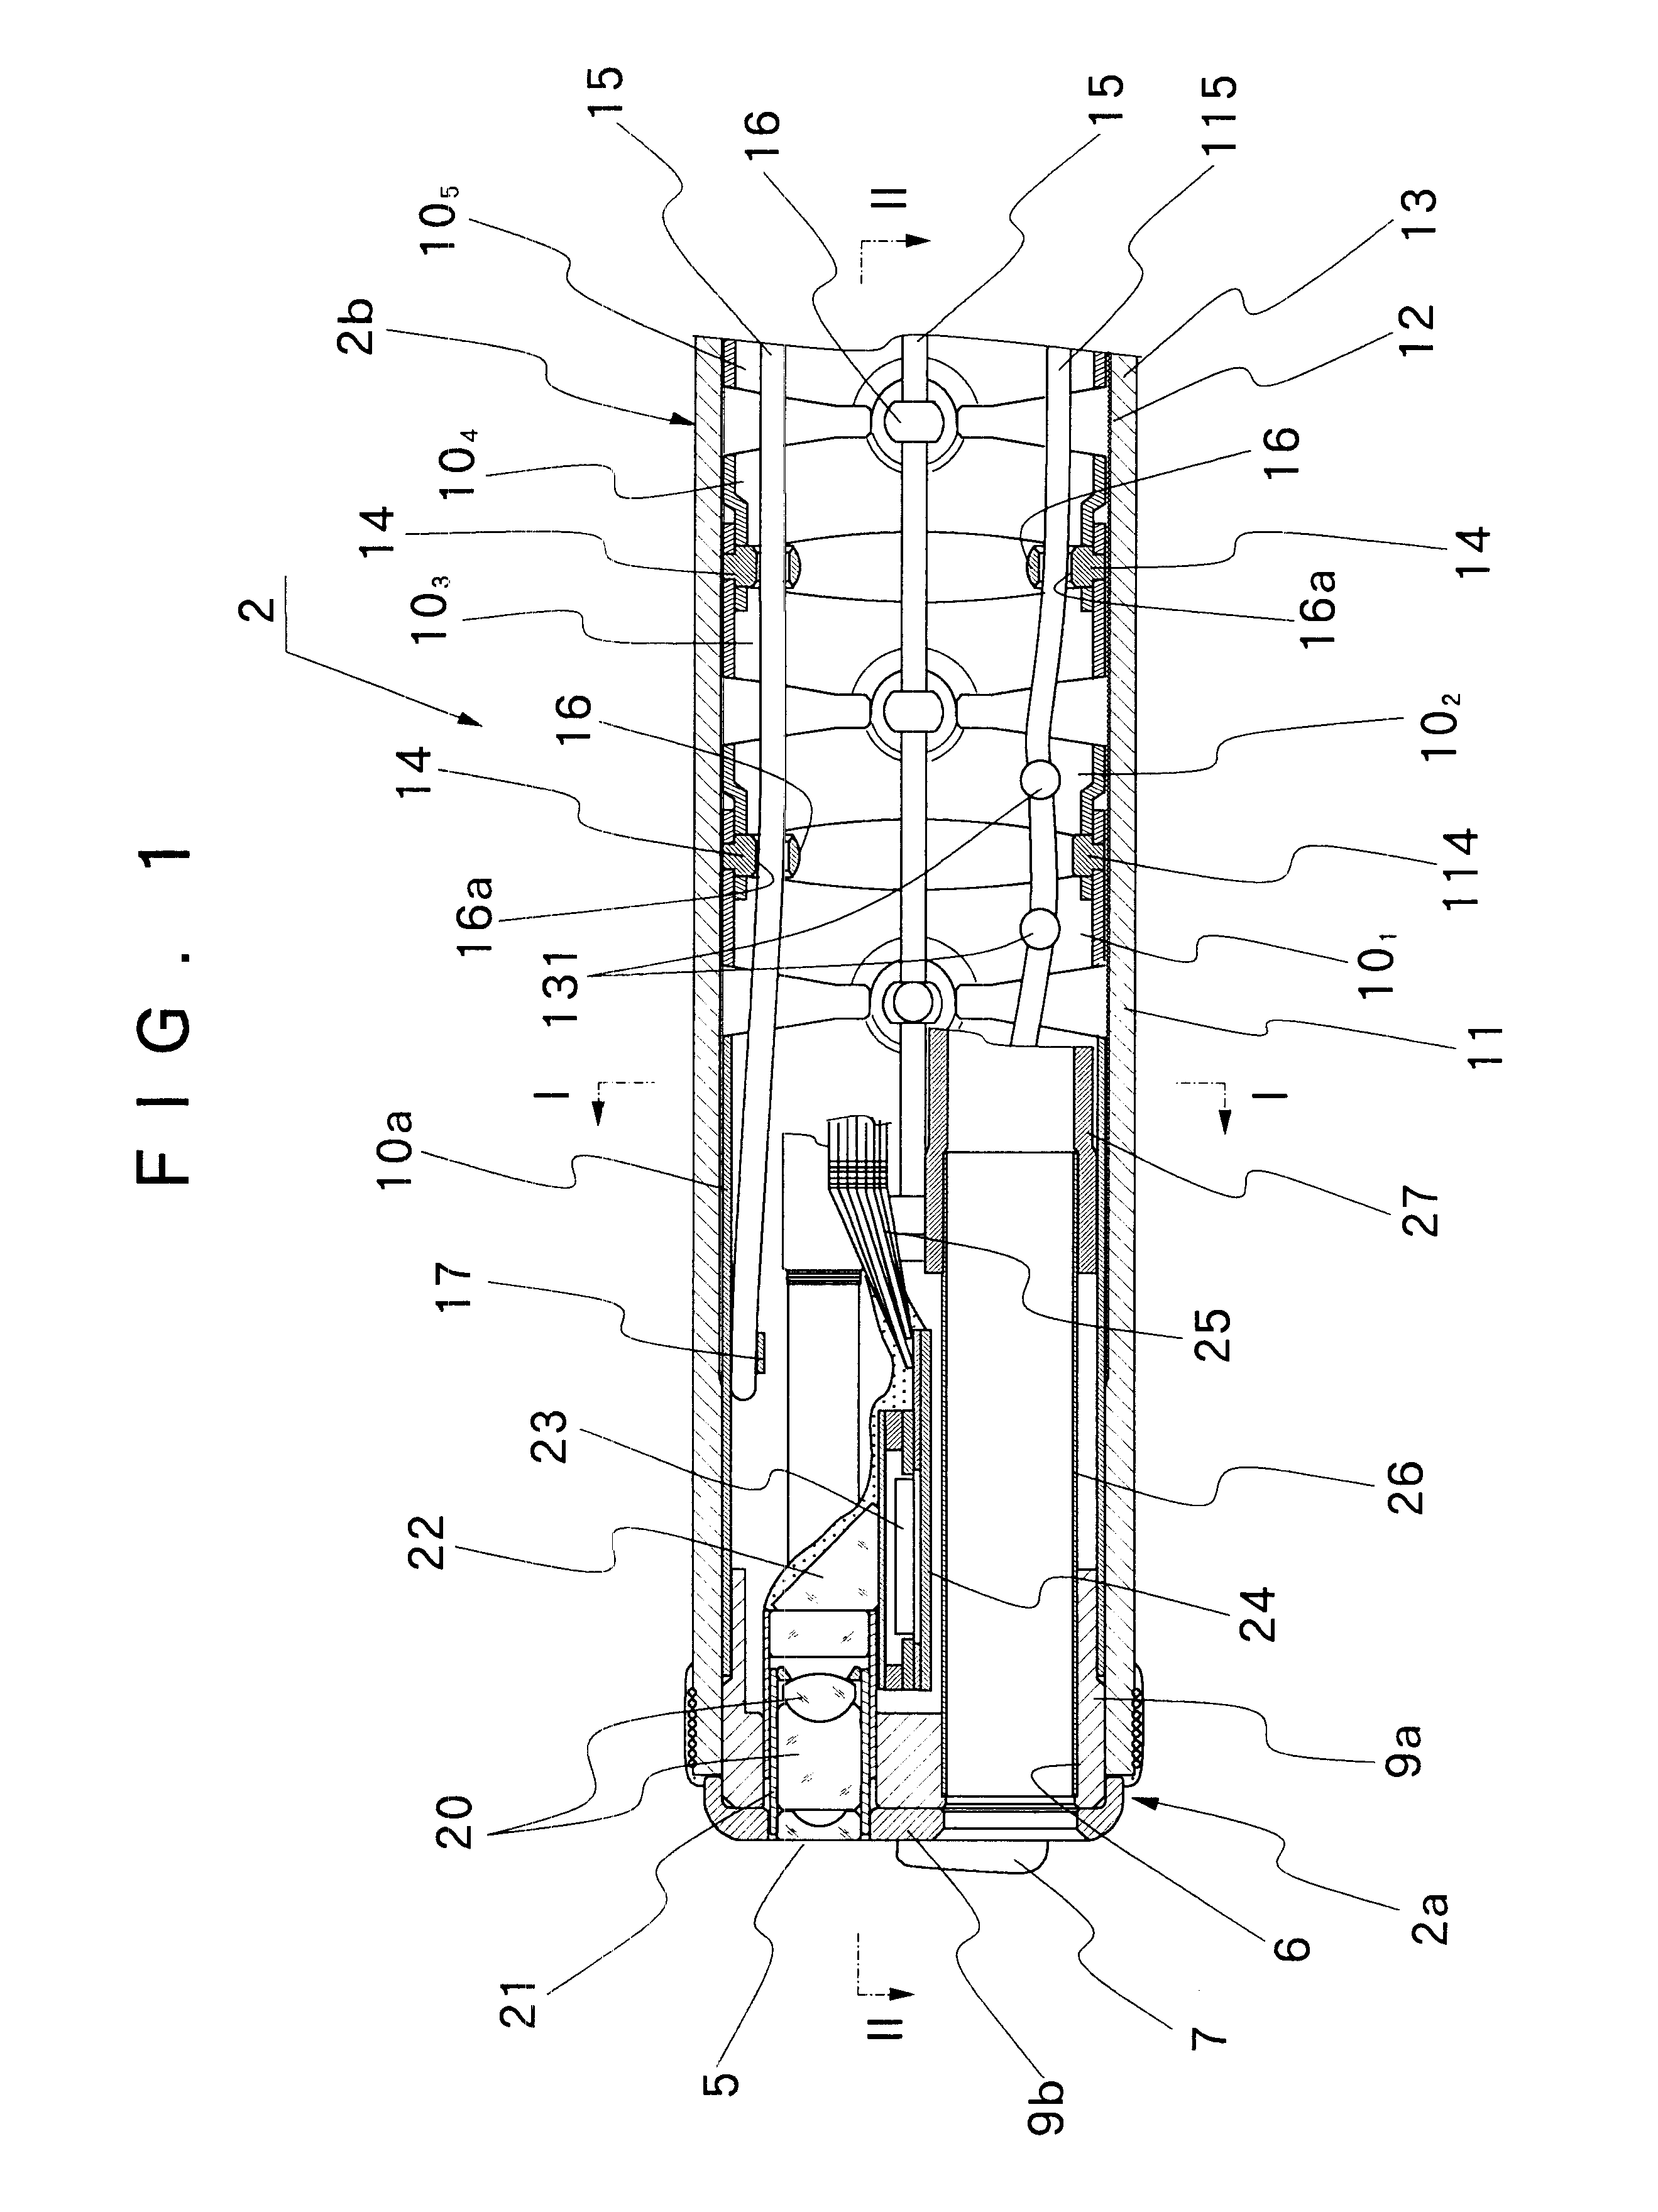 Angle portion of an endoscope